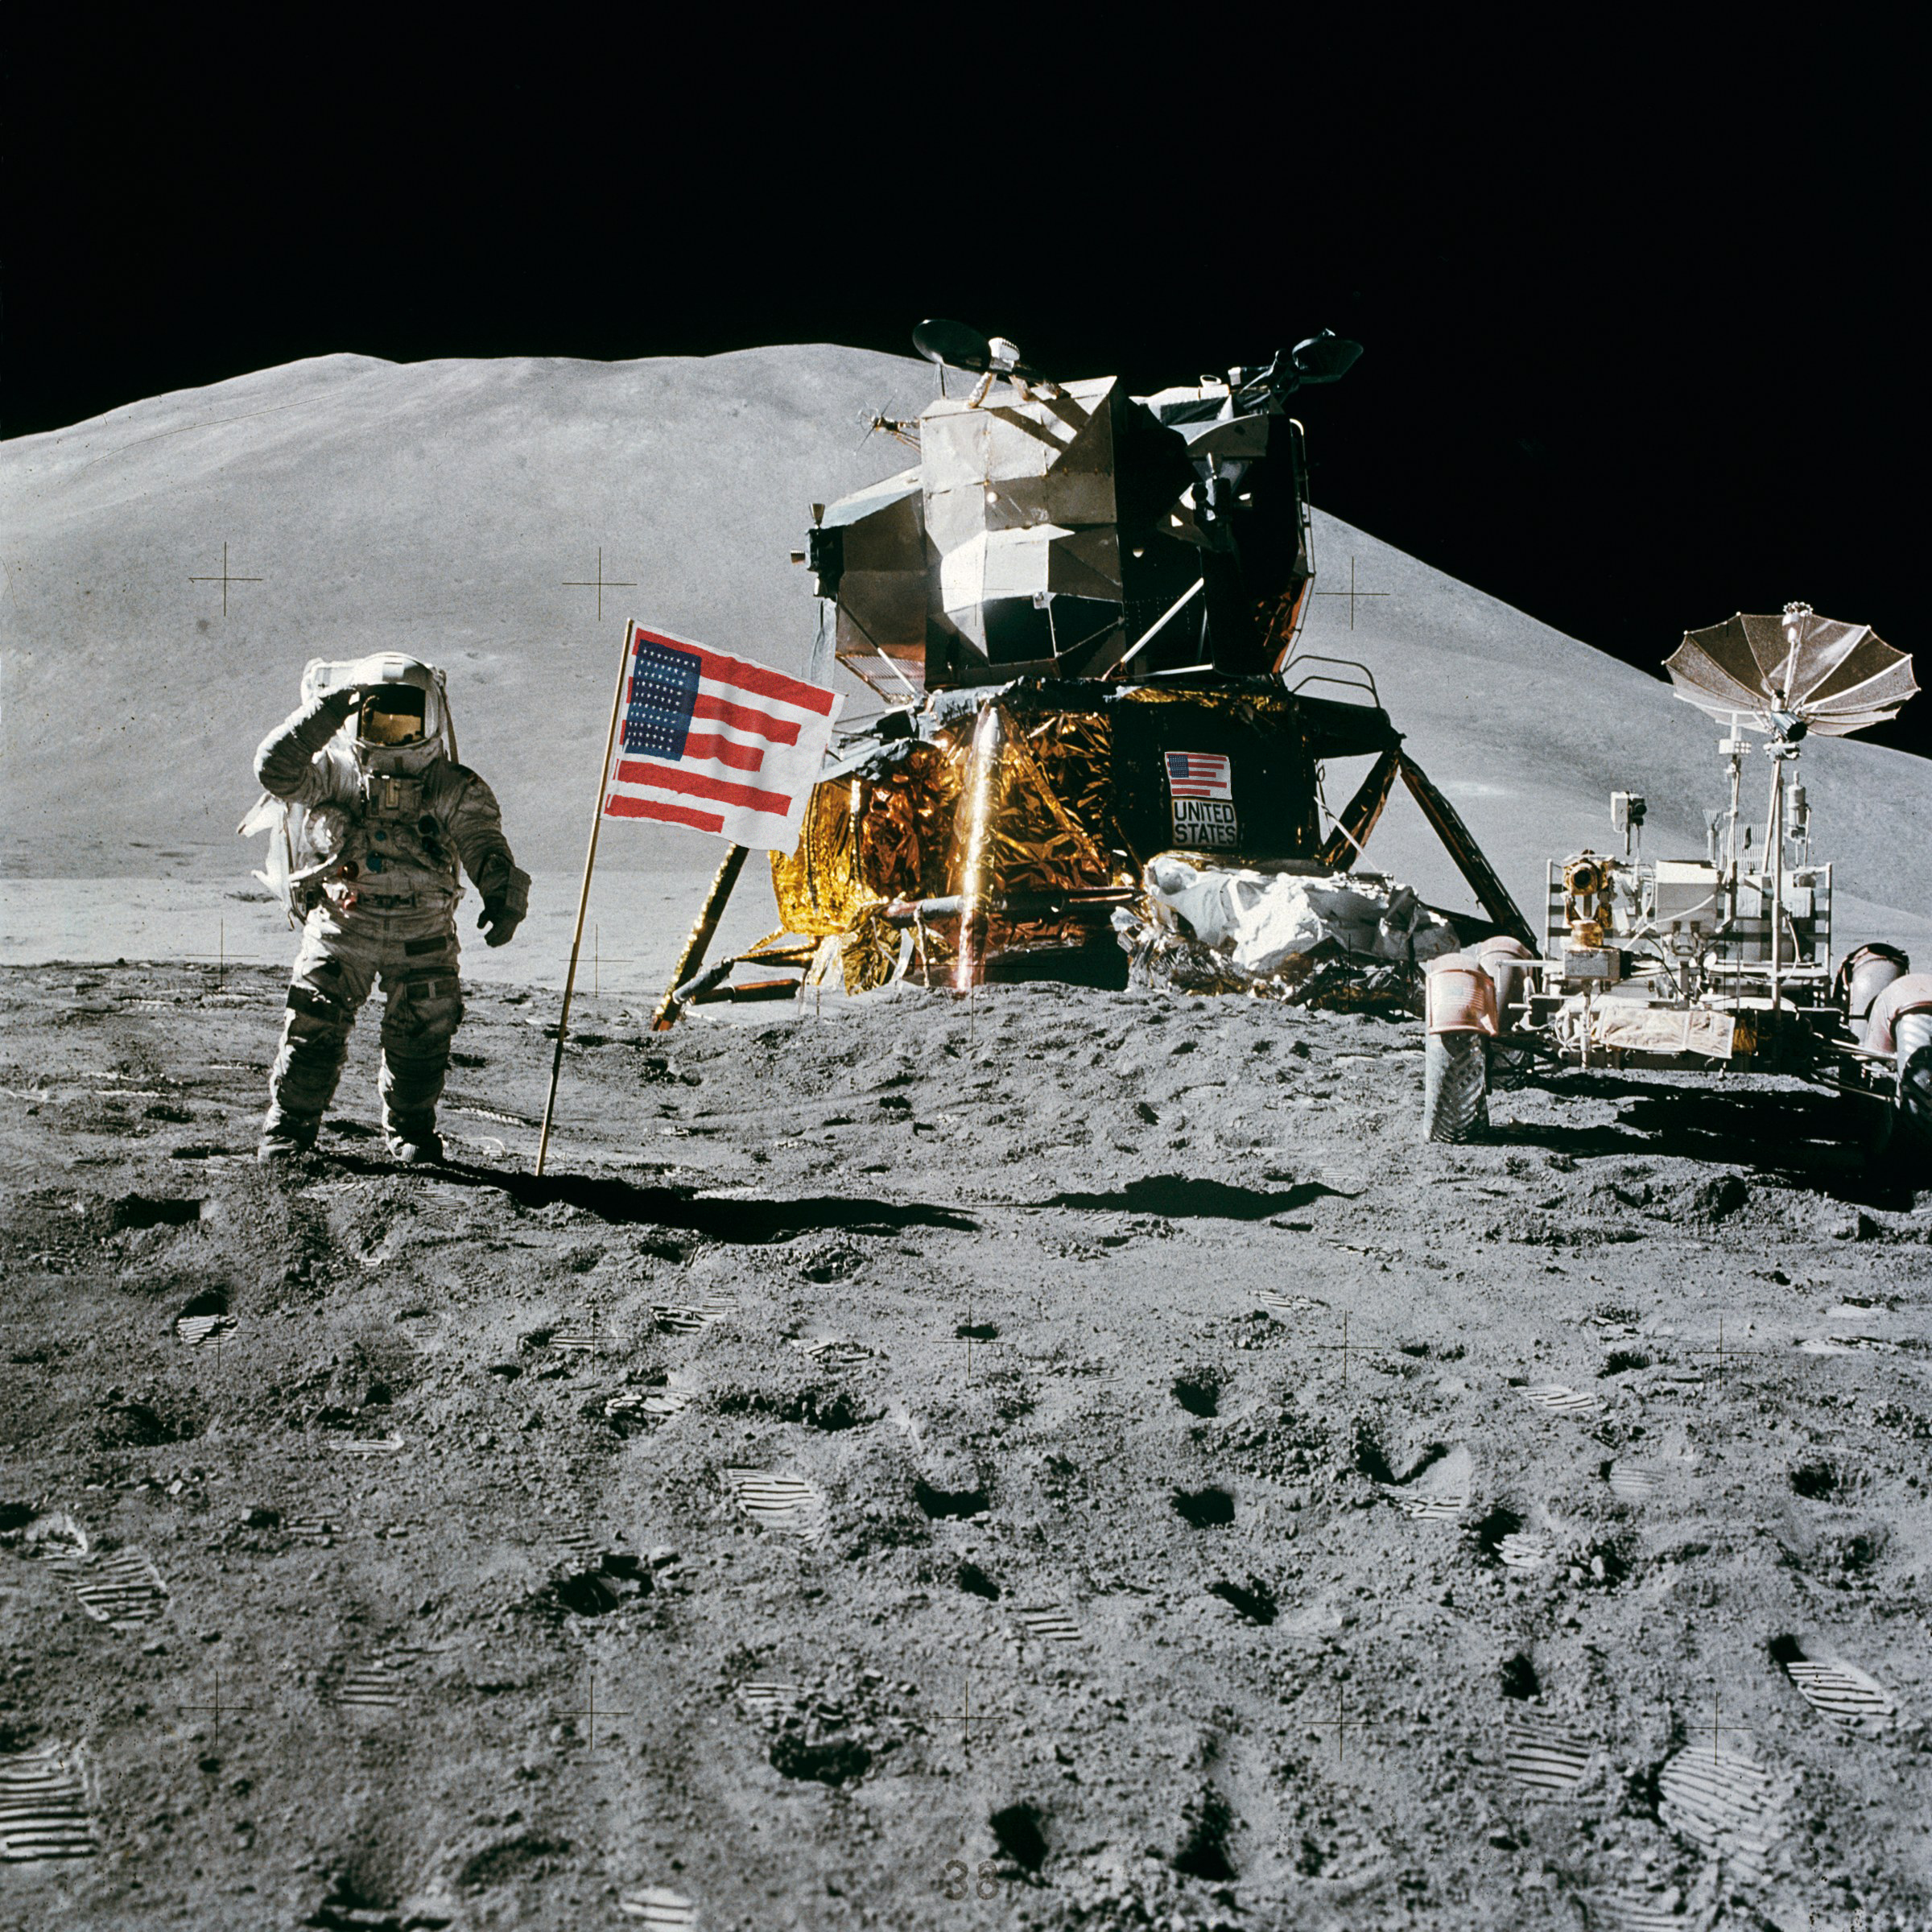 1973 / Apollo 15 moon landing